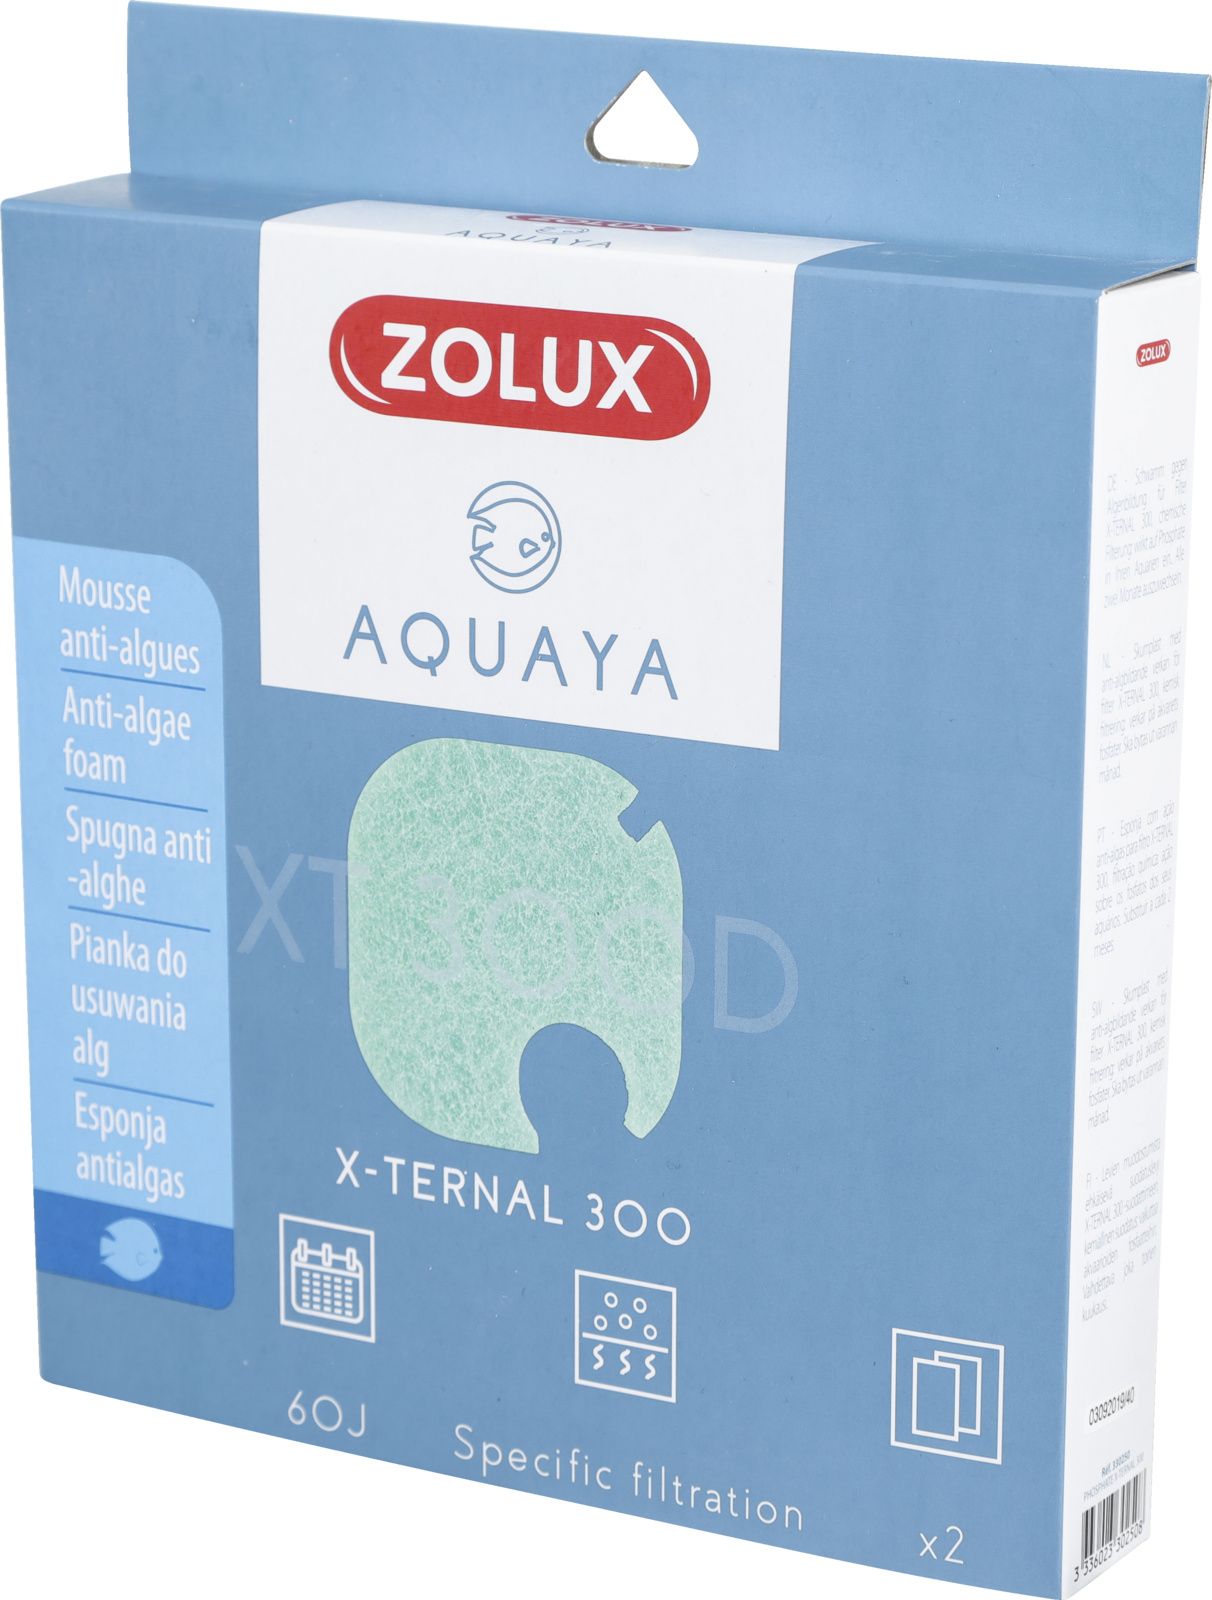 Zolux AQUAYA Wklad Phosphate Xternal 300 7544702 (3336023302508) akvārija filtrs